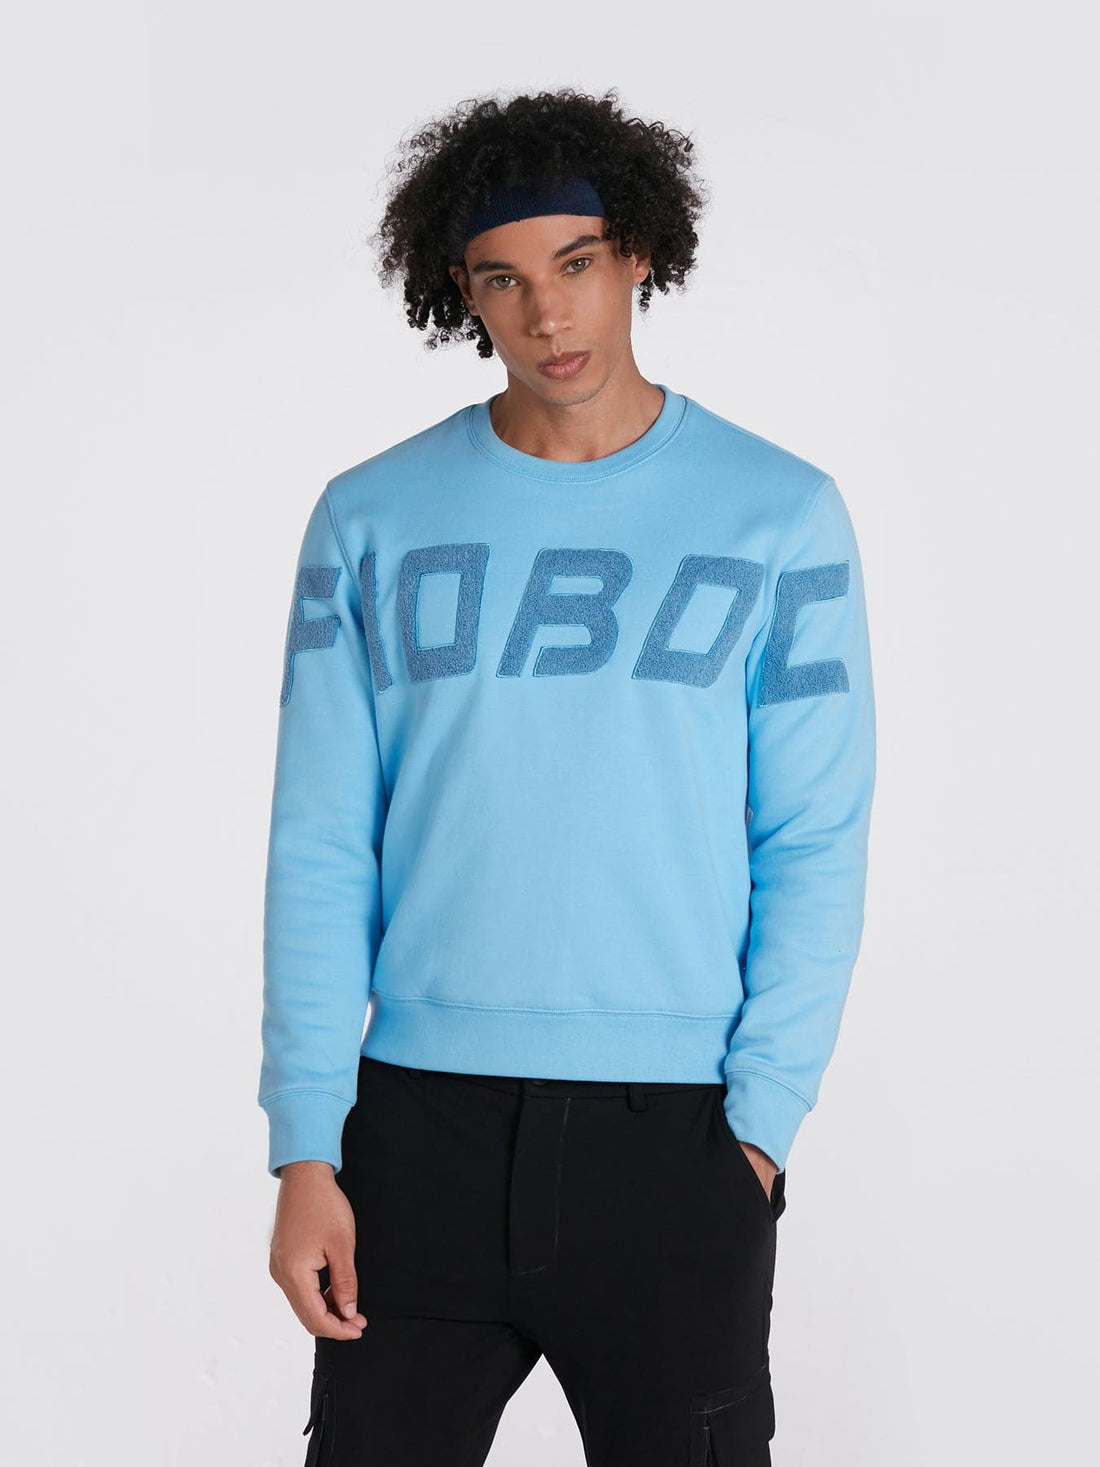 Sky Blue Pullover Sweatshirt